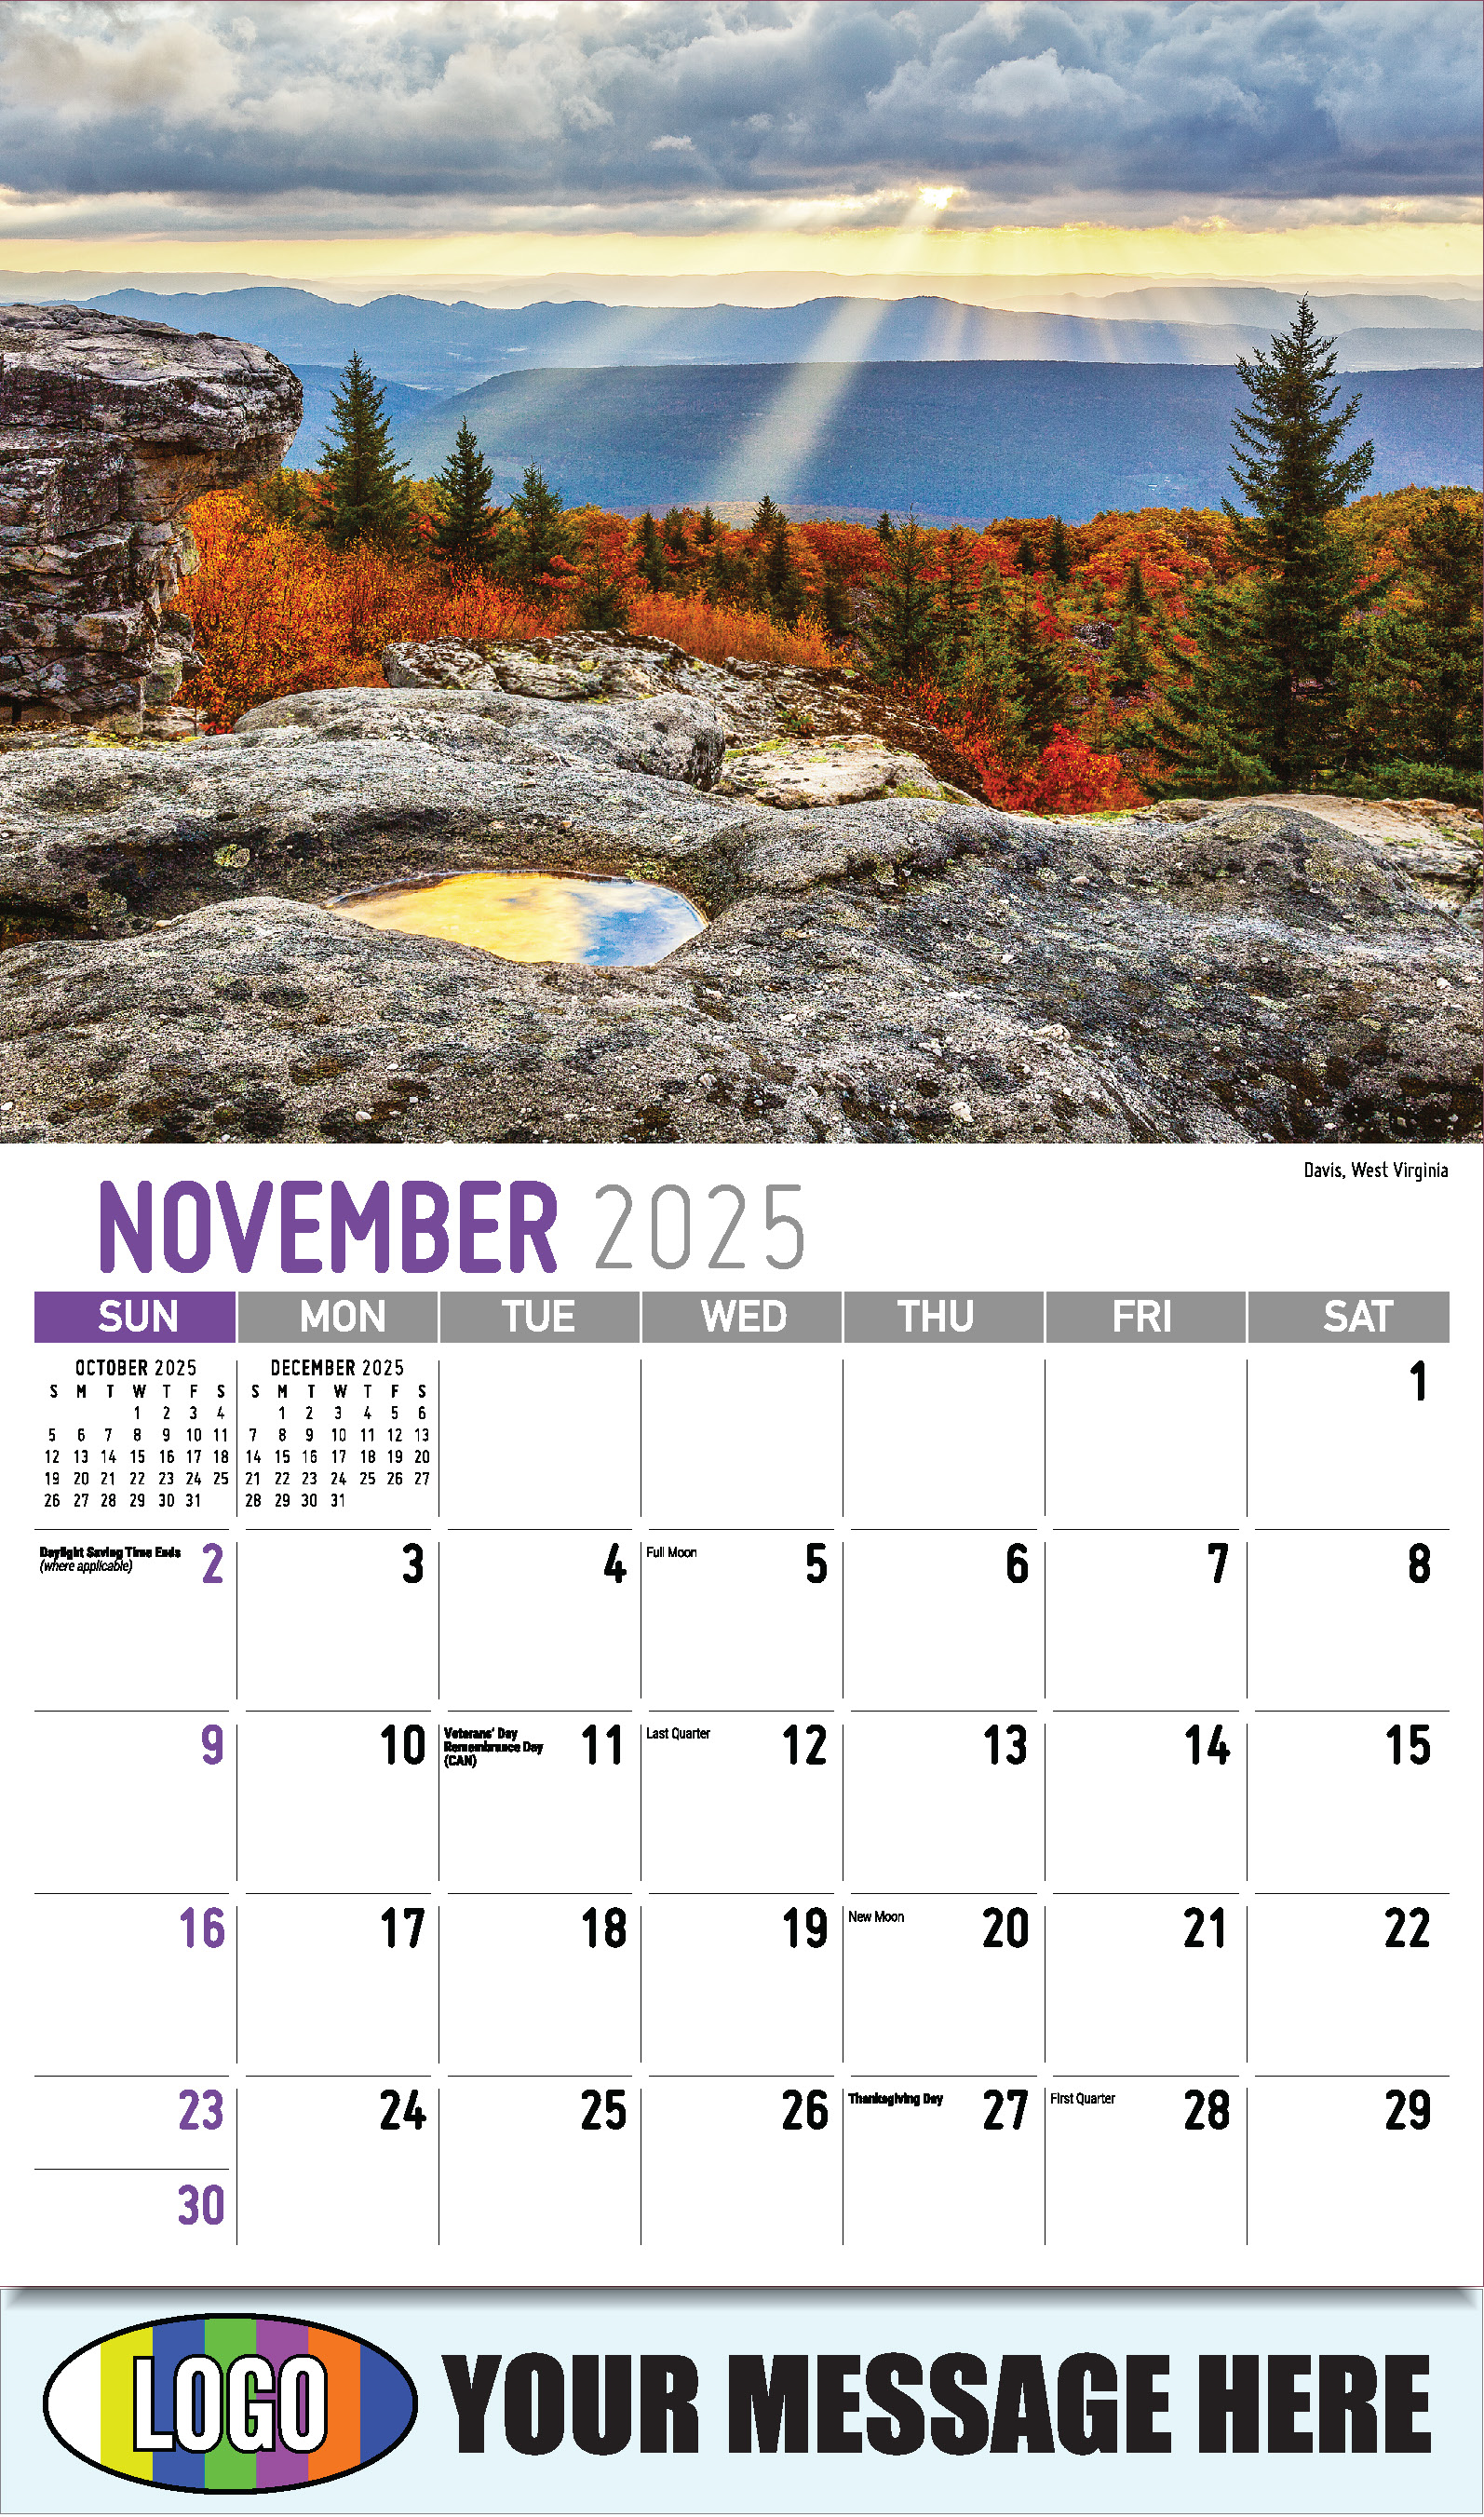 Scenes of Southeast USA 2025 Business Promo Wall Calendar - November